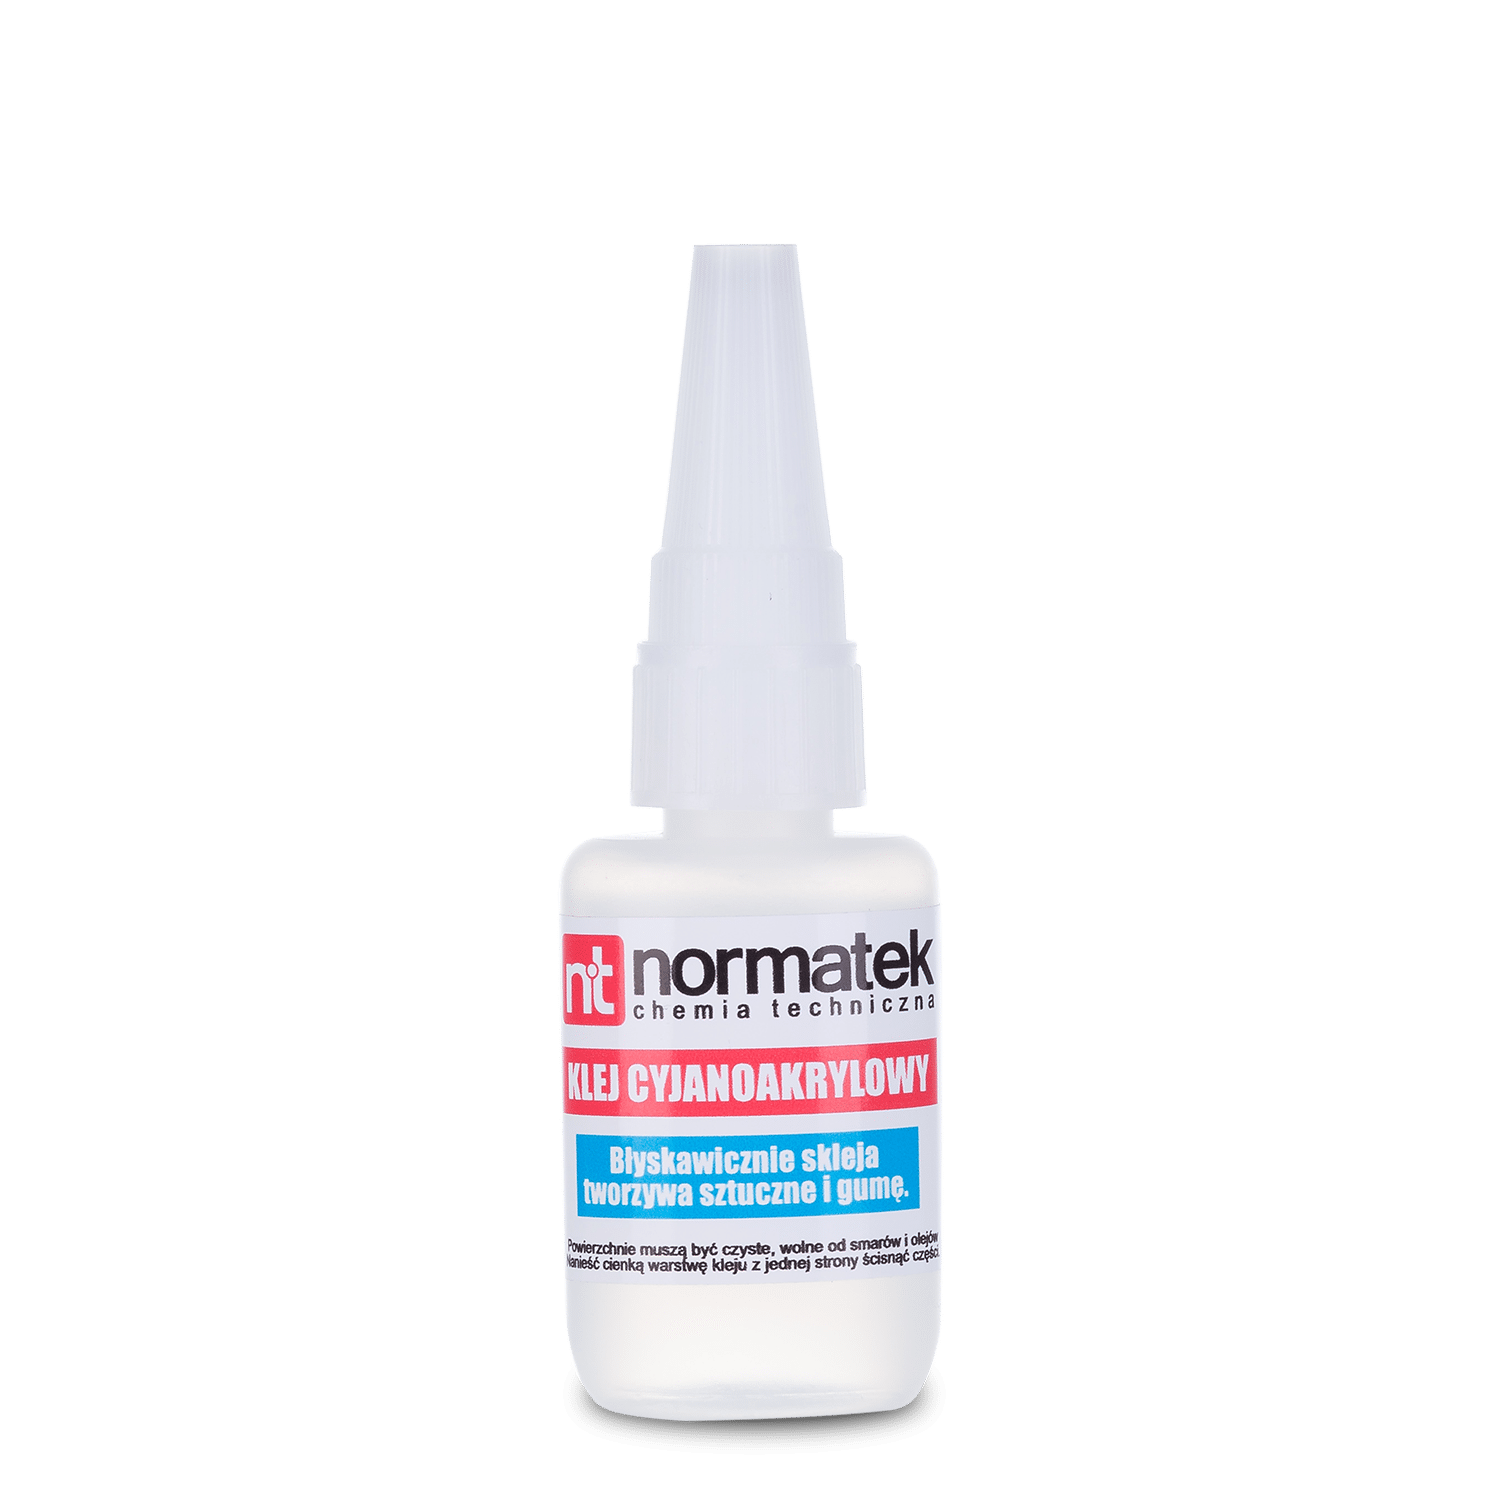 NORMATEK - Klej cyjanoakrylowy NT202